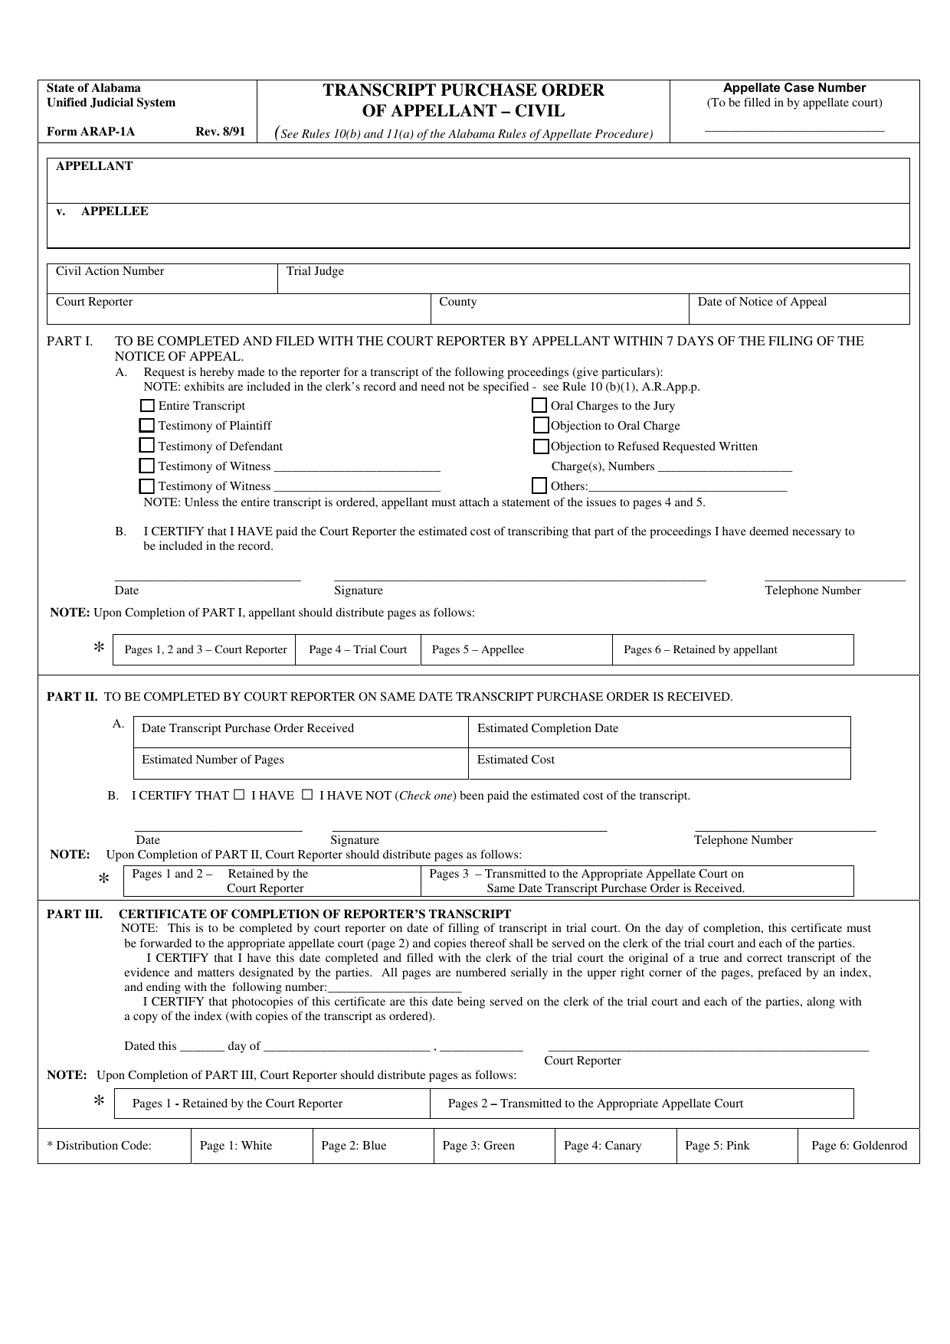 Form ARAP-1A Transcript Purchase Order of Appellant - Civil - Alabama, Page 1